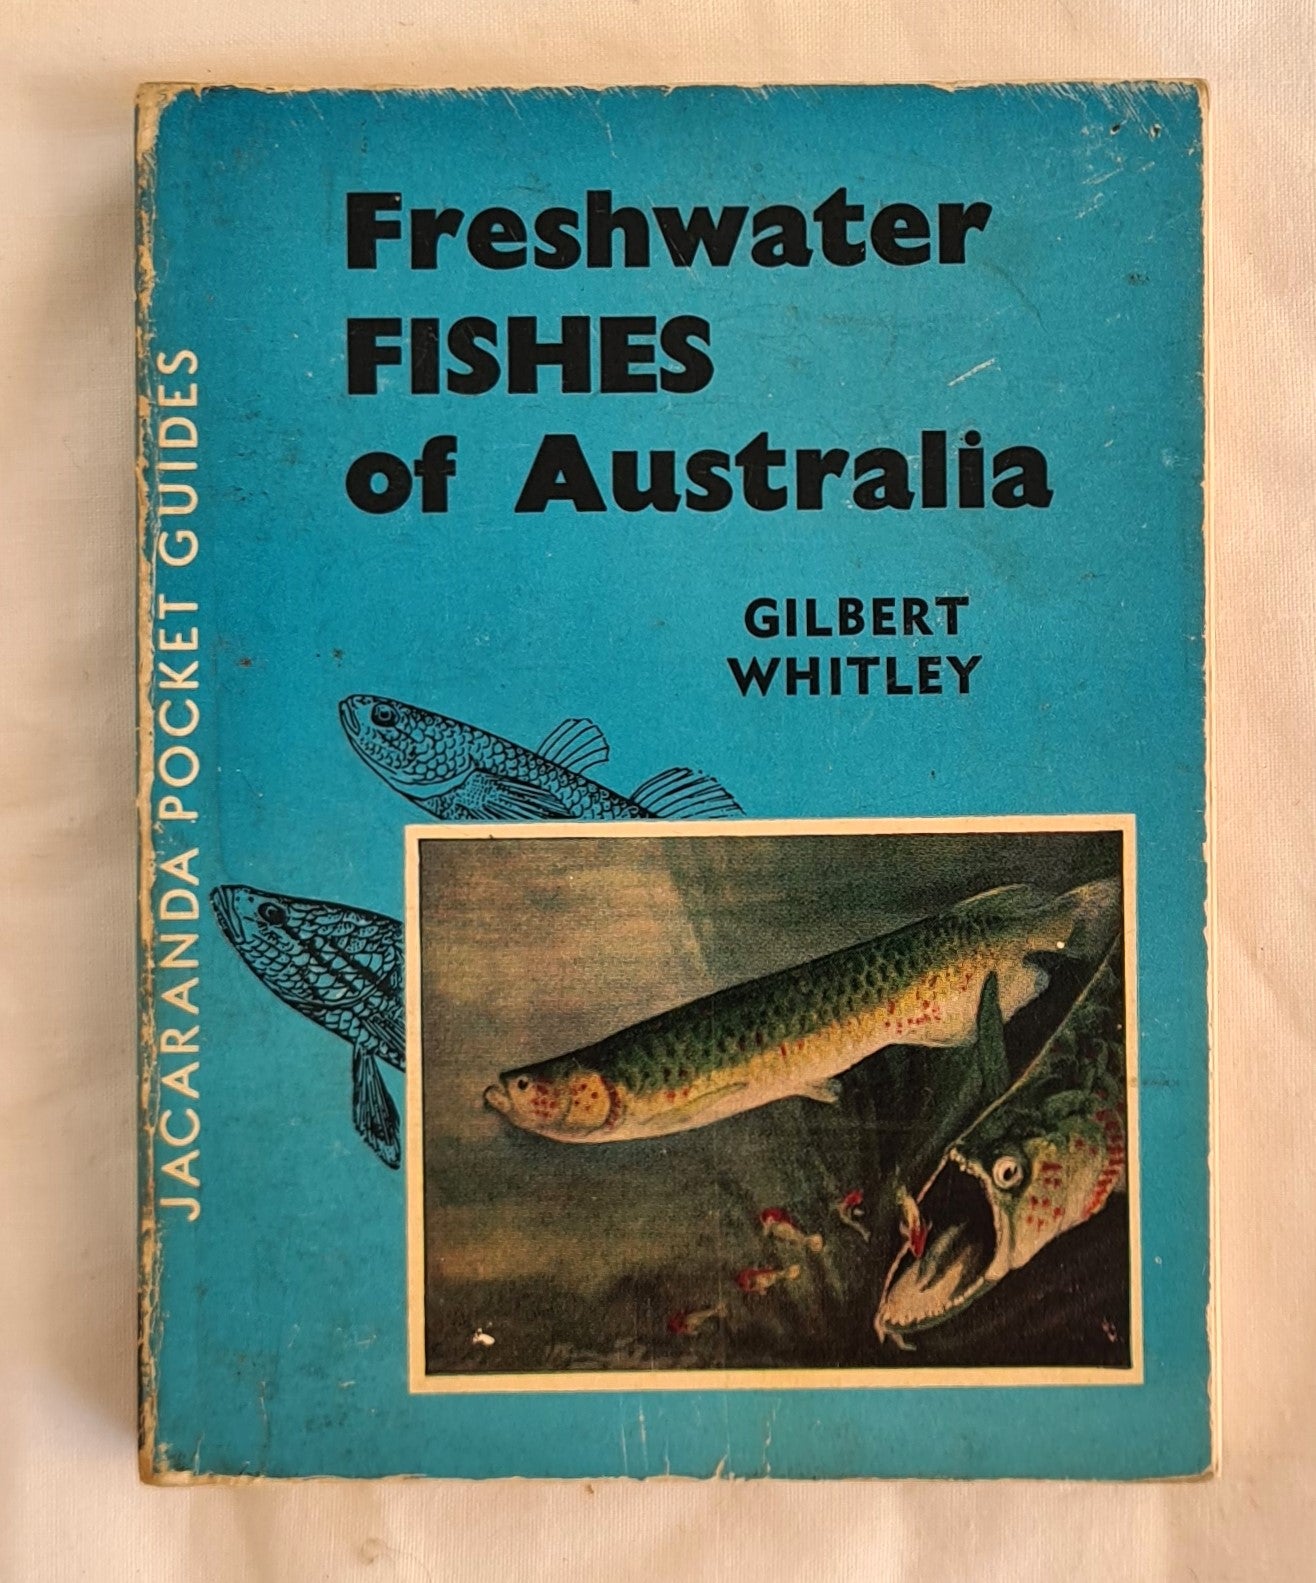 Freshwater Fishes of Australia  by Gilbert P. Whitley  Jacaranda Pocket Guides